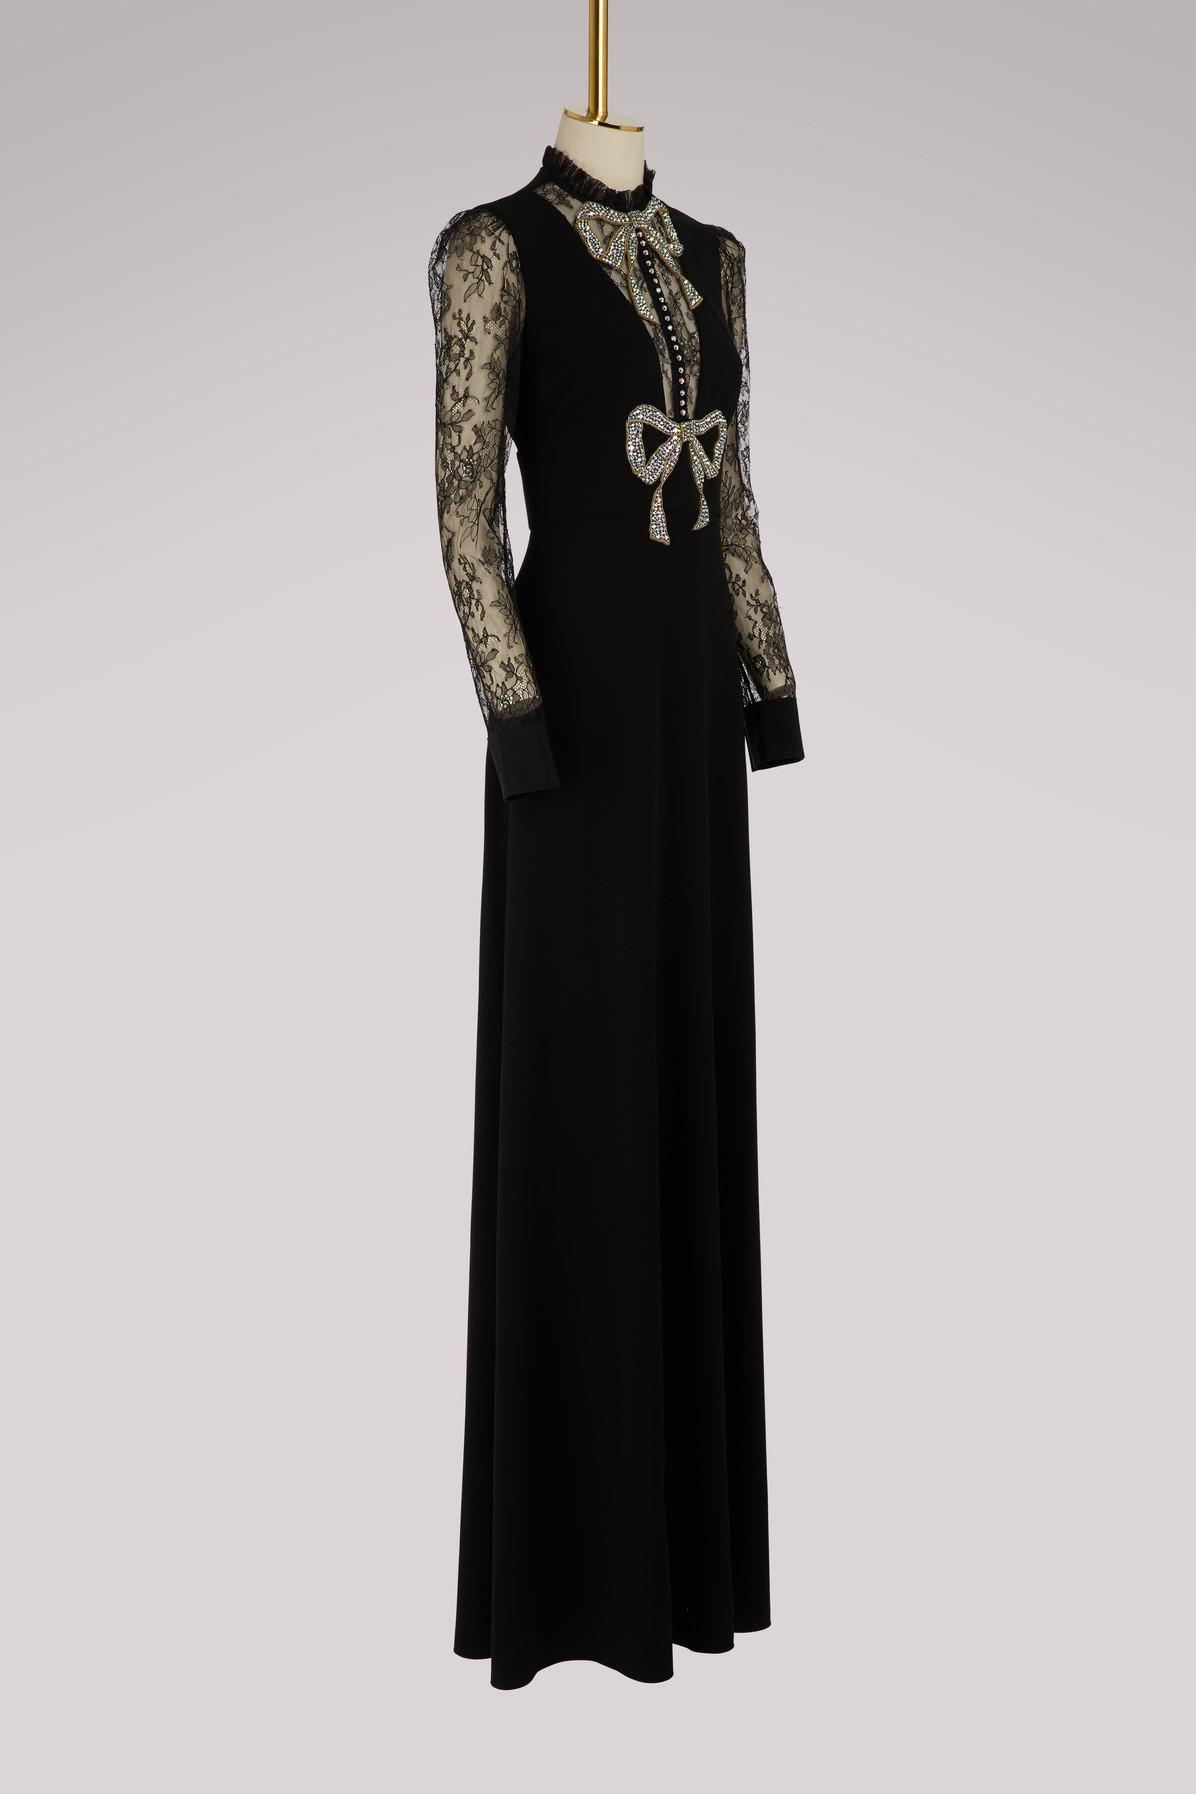 gucci black lace dress